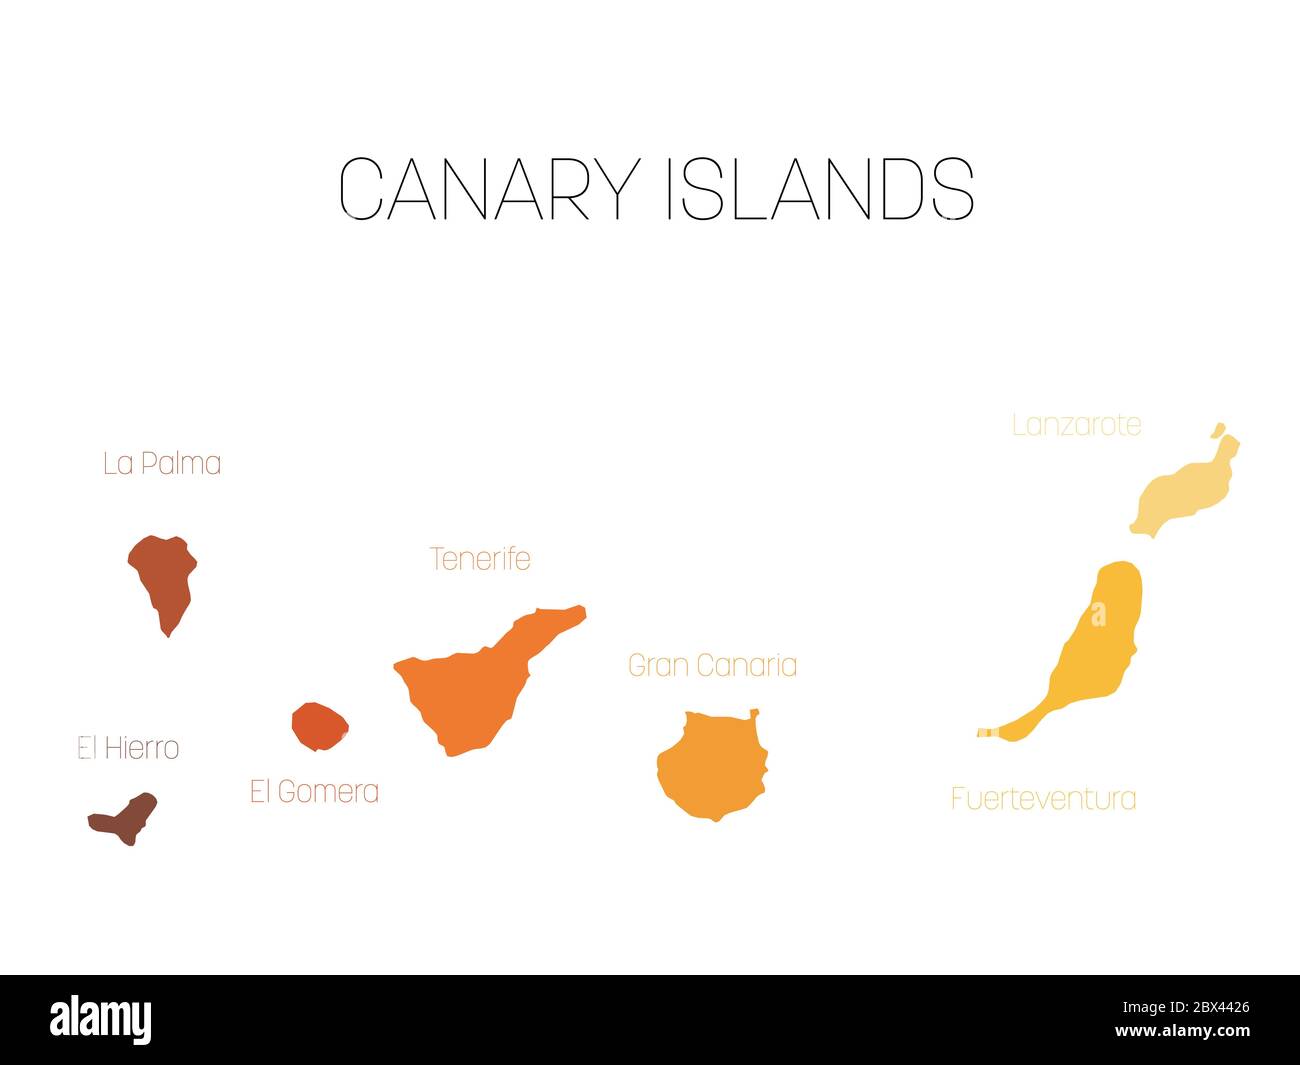 Map of Canary Islands, Spain, with labels of each island - El Hierro, La Palma, La Gomera, Tenerife, Gran Canaria, Fuerteventura and Lanzarote. Vector silhouette on white background. Stock Vector